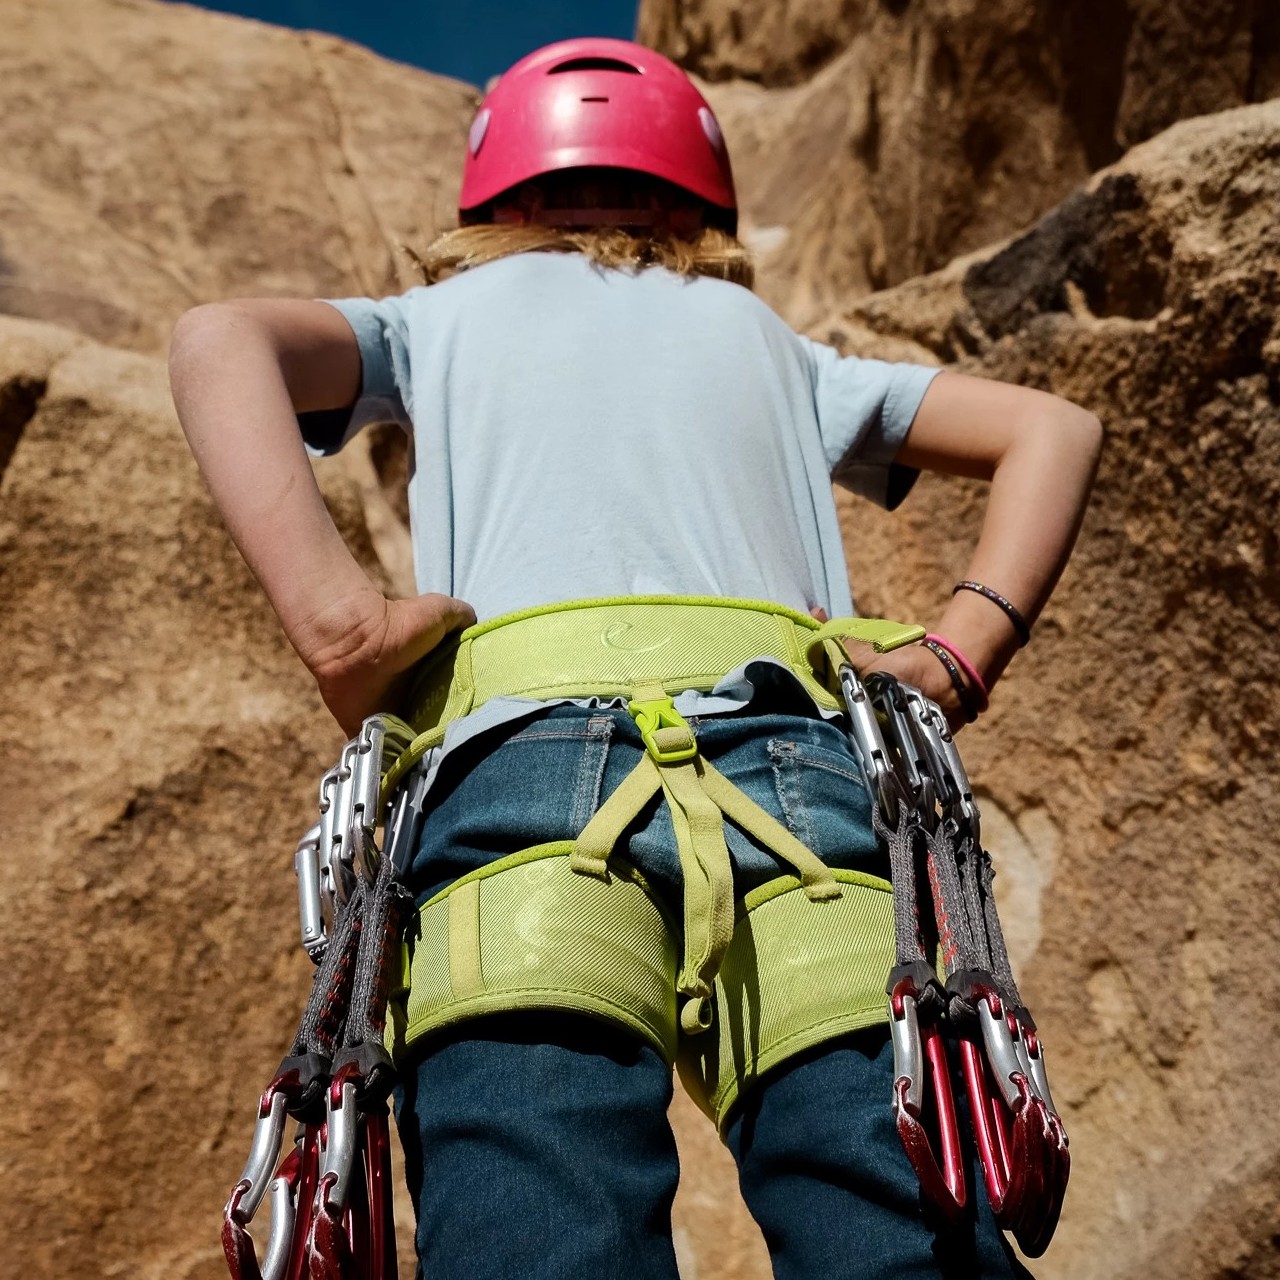 Edelrid Finn III Kid's Rock Climbing Harness